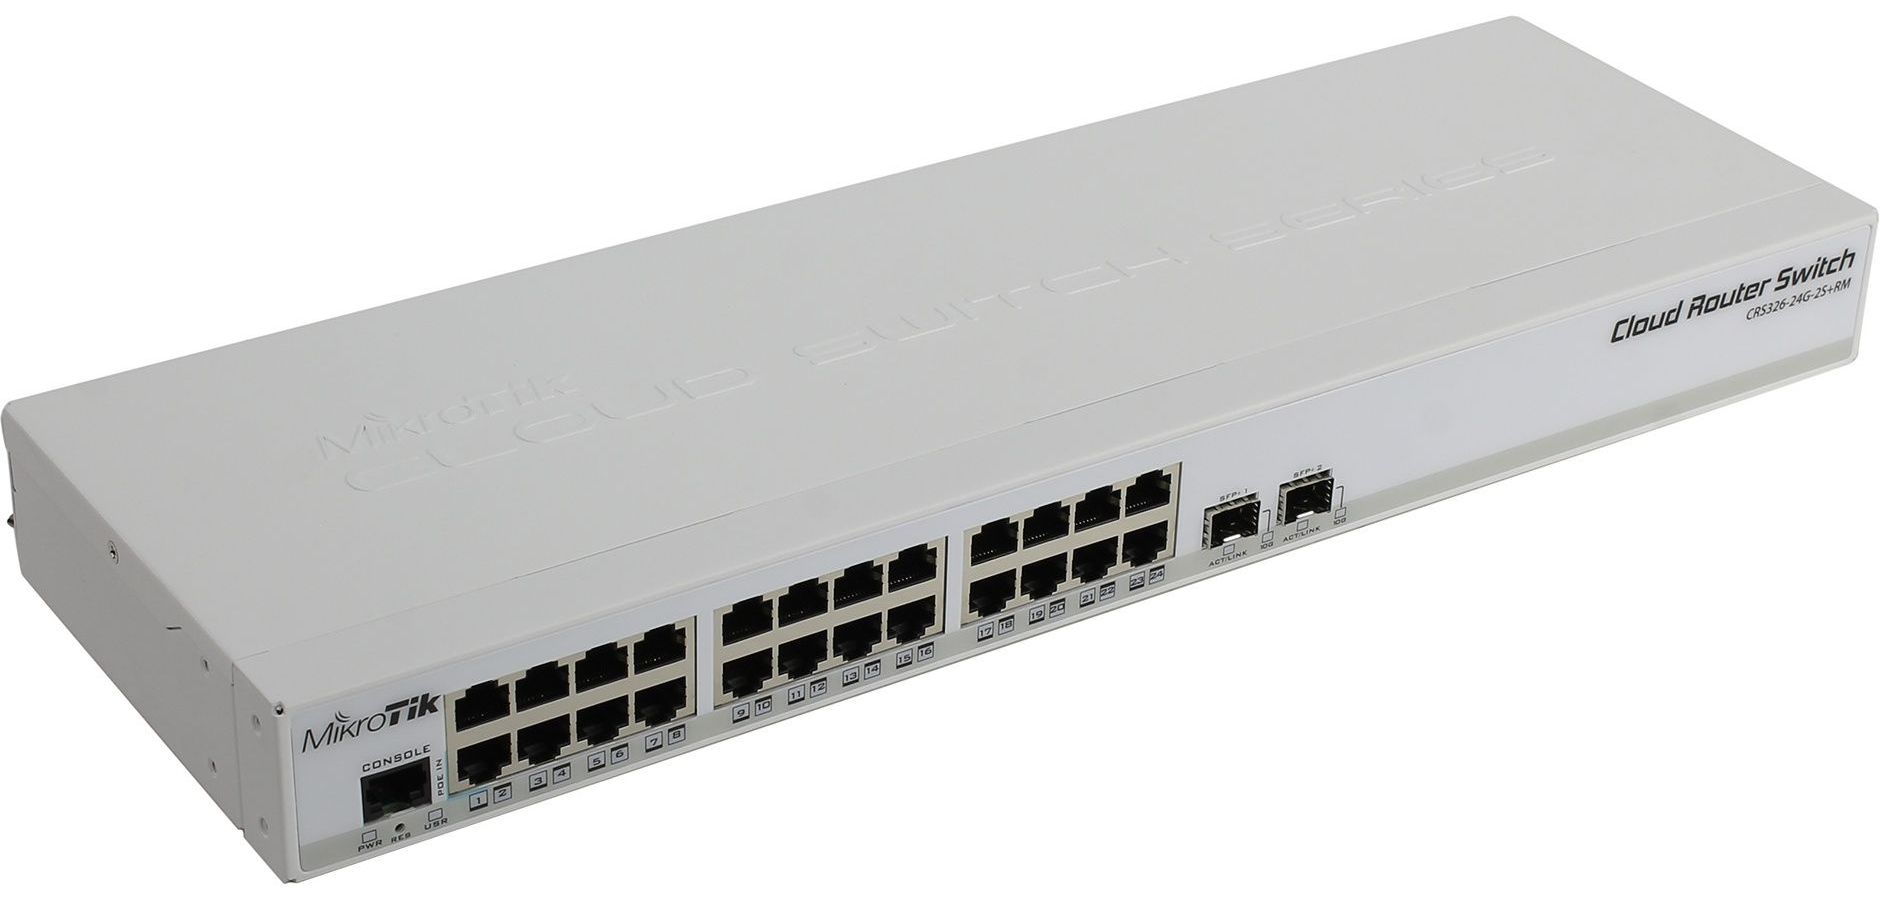 Коммутатор MikroTik Cloud Router Switch CRS326-24G-2S+RM коммутатор mikrotik crs326 24g 2s rm cloud router switch 326 24g 2s rm with 800 mhz cpu 512mb ram 24xgigabit lan 2xsfp cages routeros l5 or switc